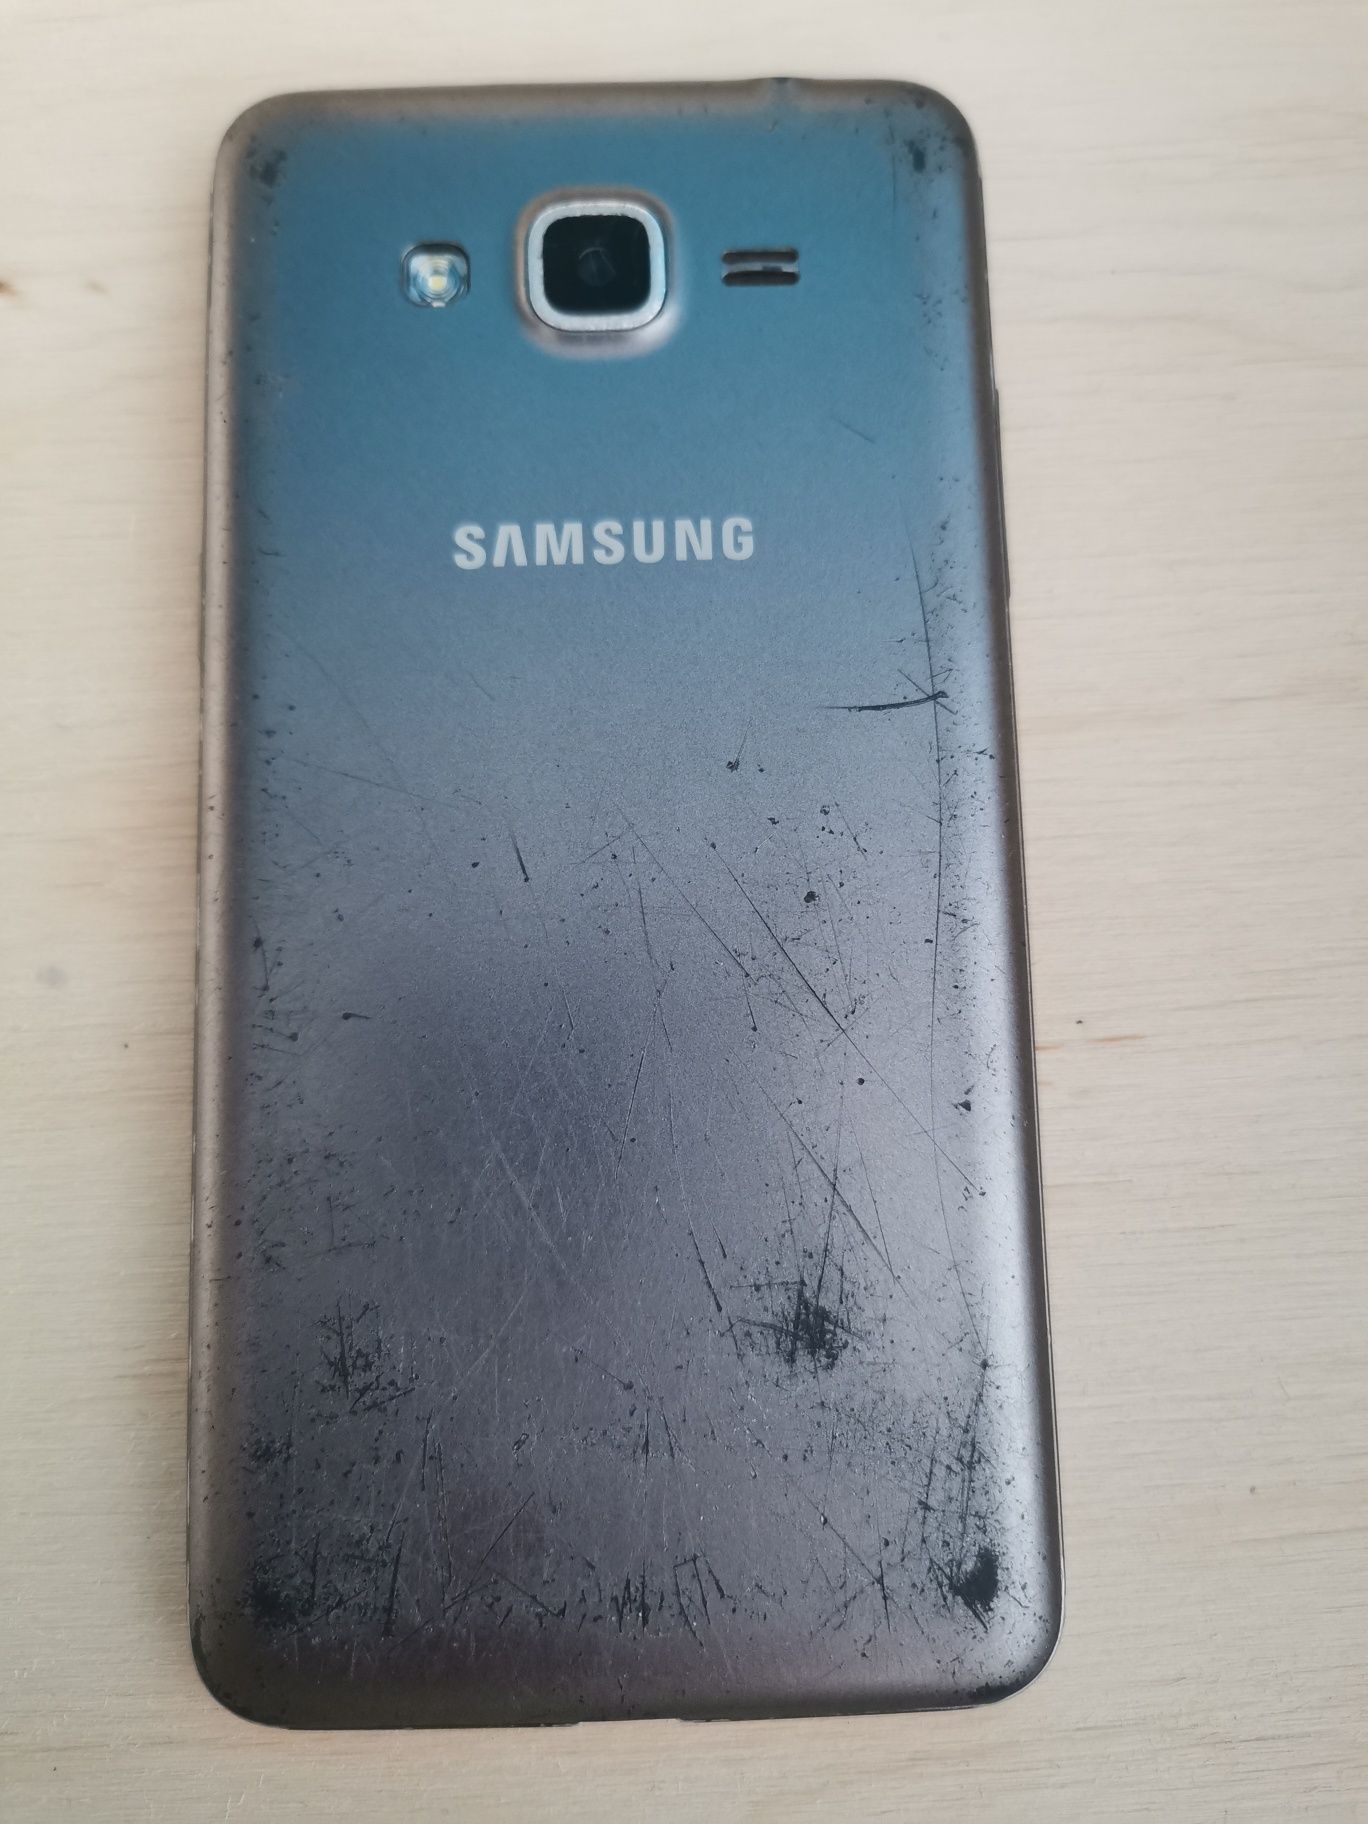 Samsung galaxy Grand Prime